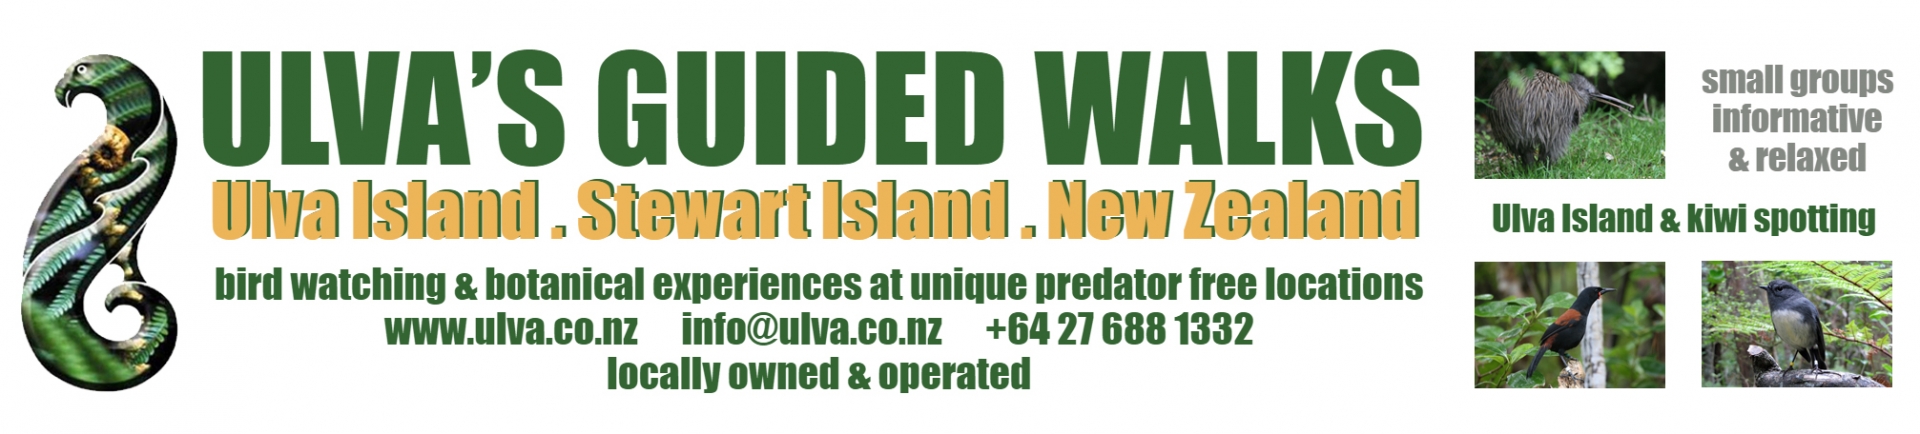 Ulva's Guided Walks logo